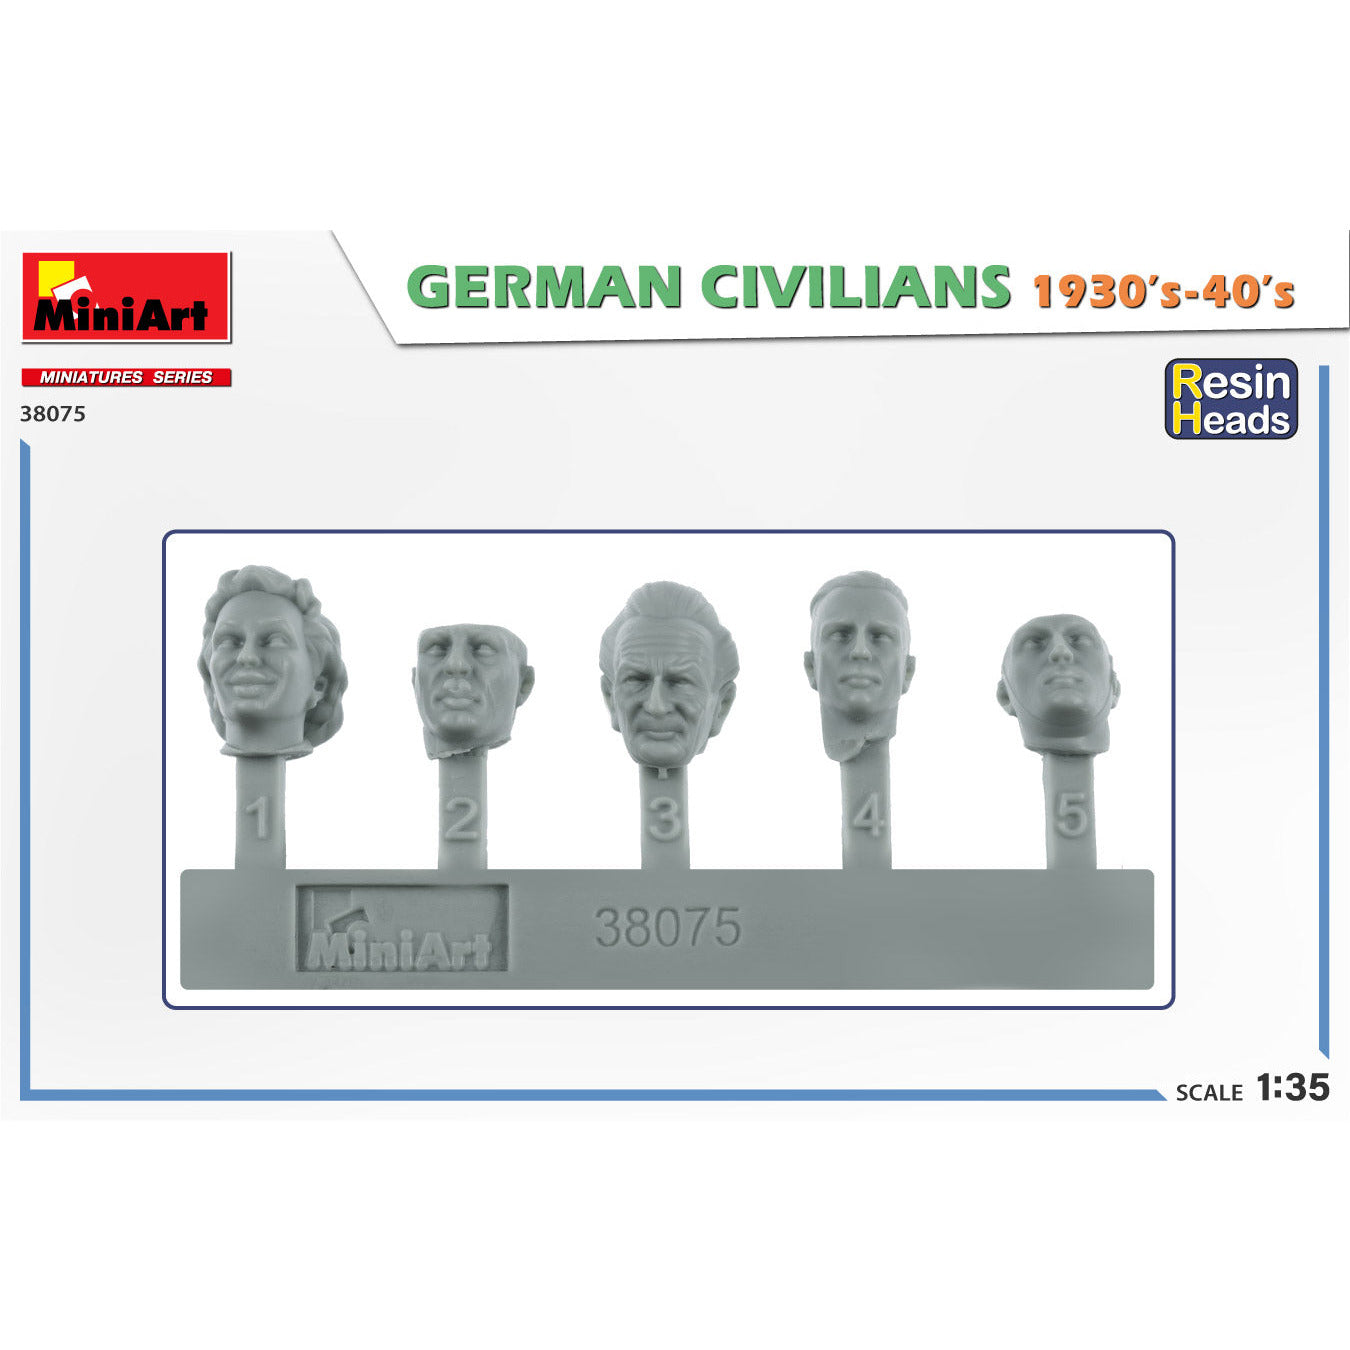 MINIART 1/35 German Civilians 1930-40's Resin Heads